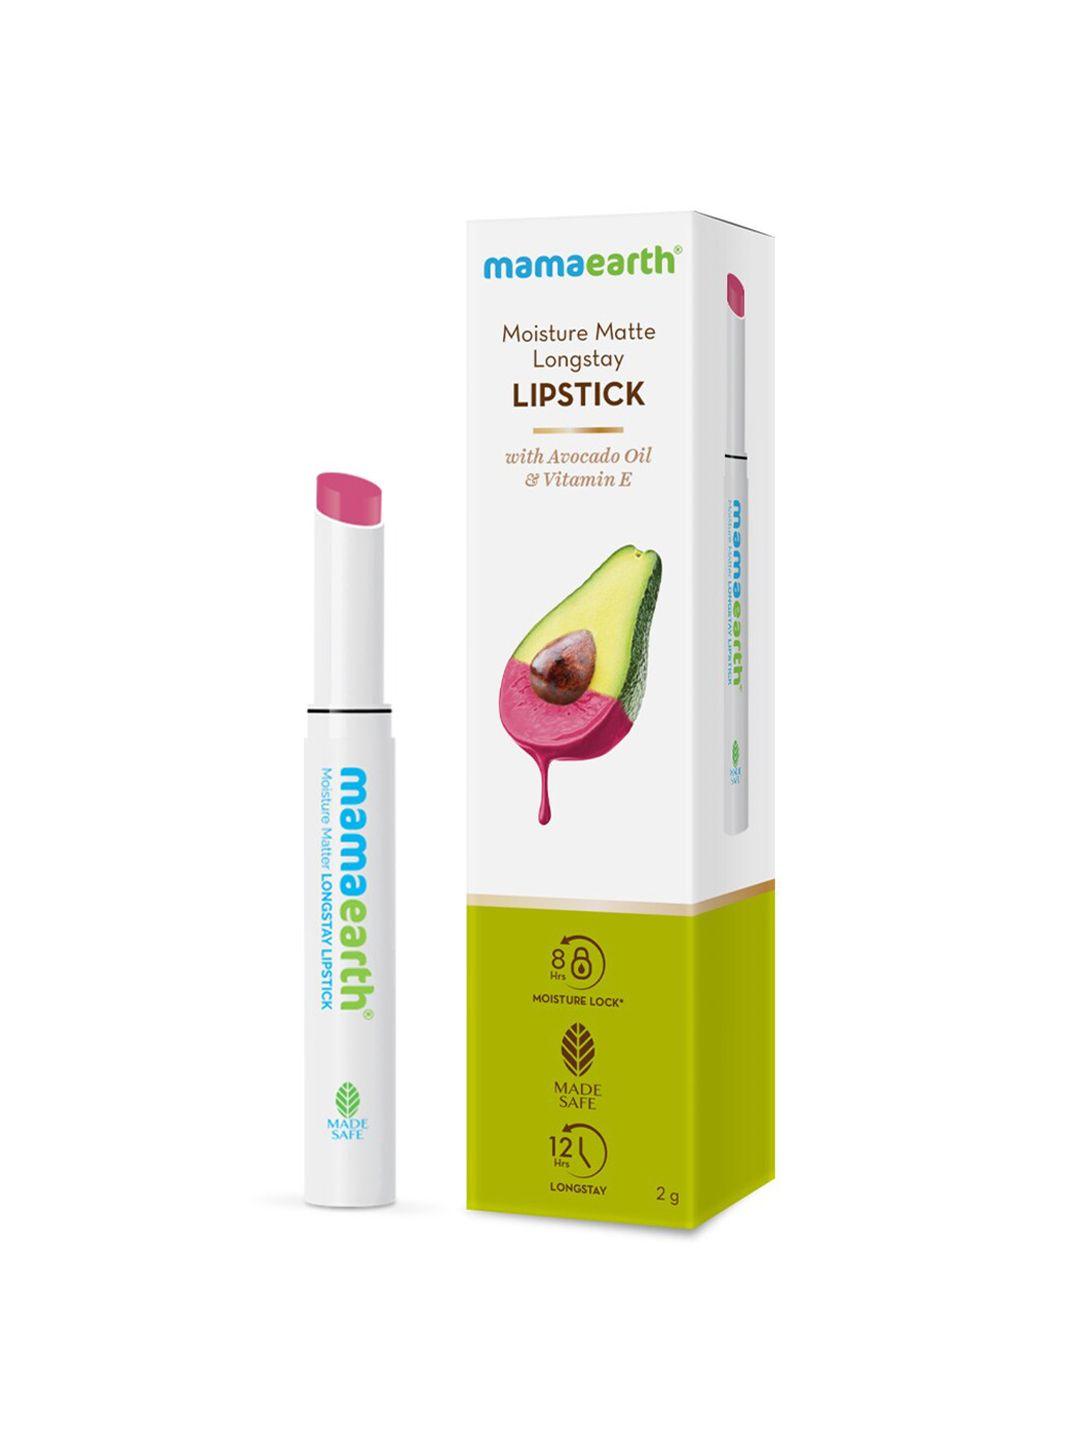 mamaearth moisture matte 12hr longstay lipstick with avocado & vitamin e - pink lemonade